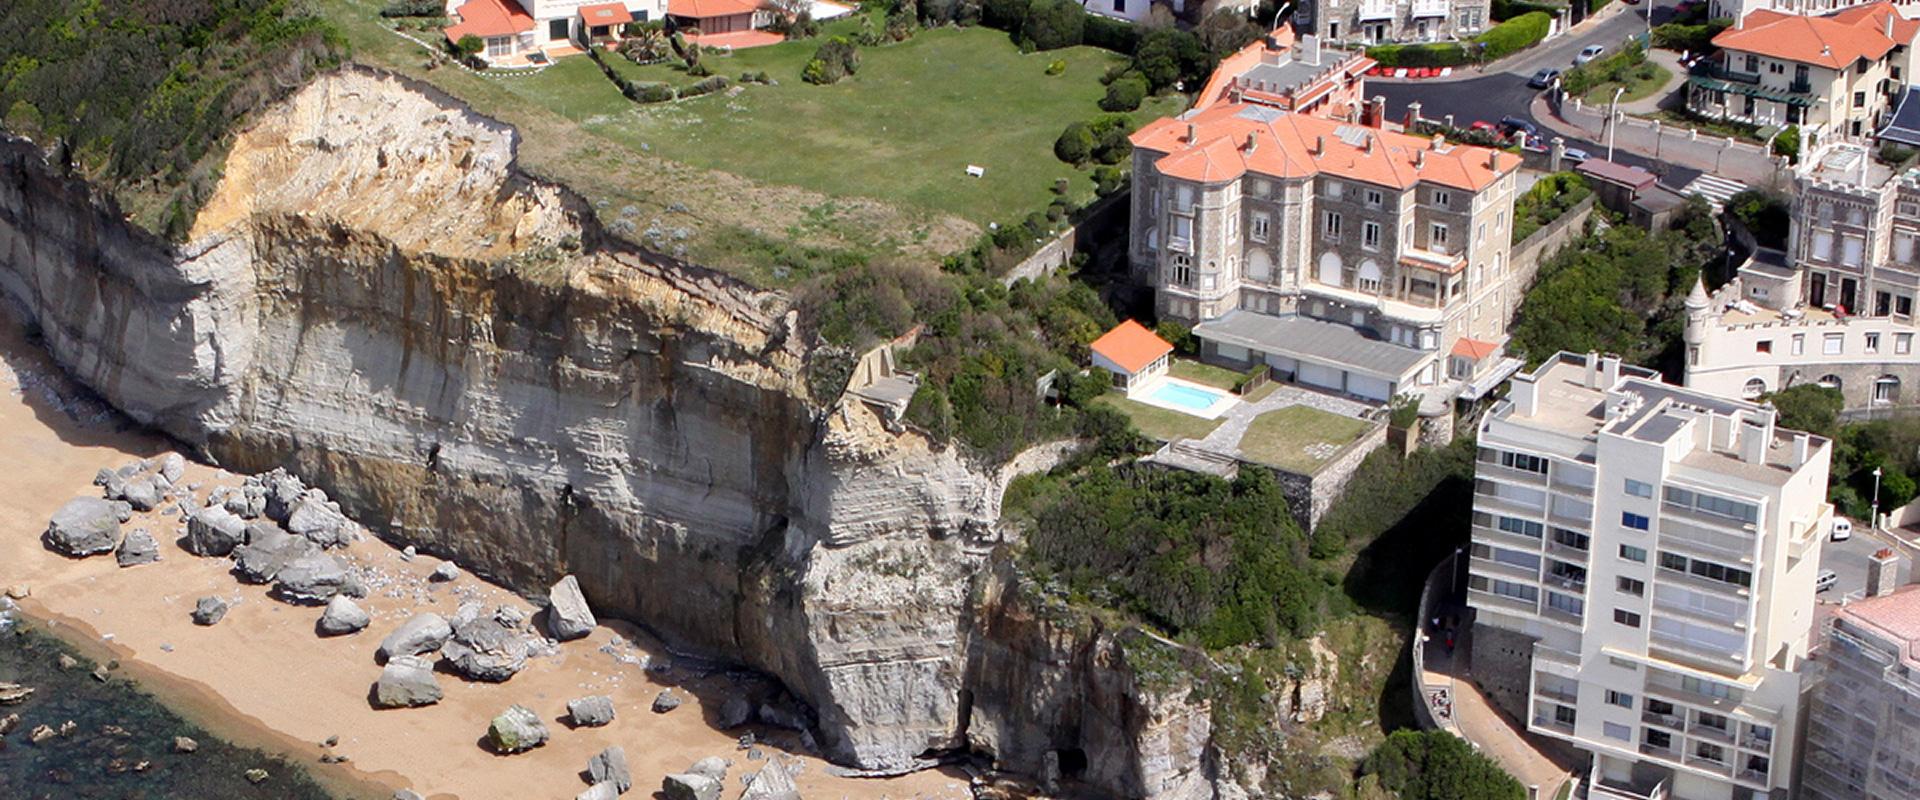 A rockfall from the Miramar cliff, Biarritz